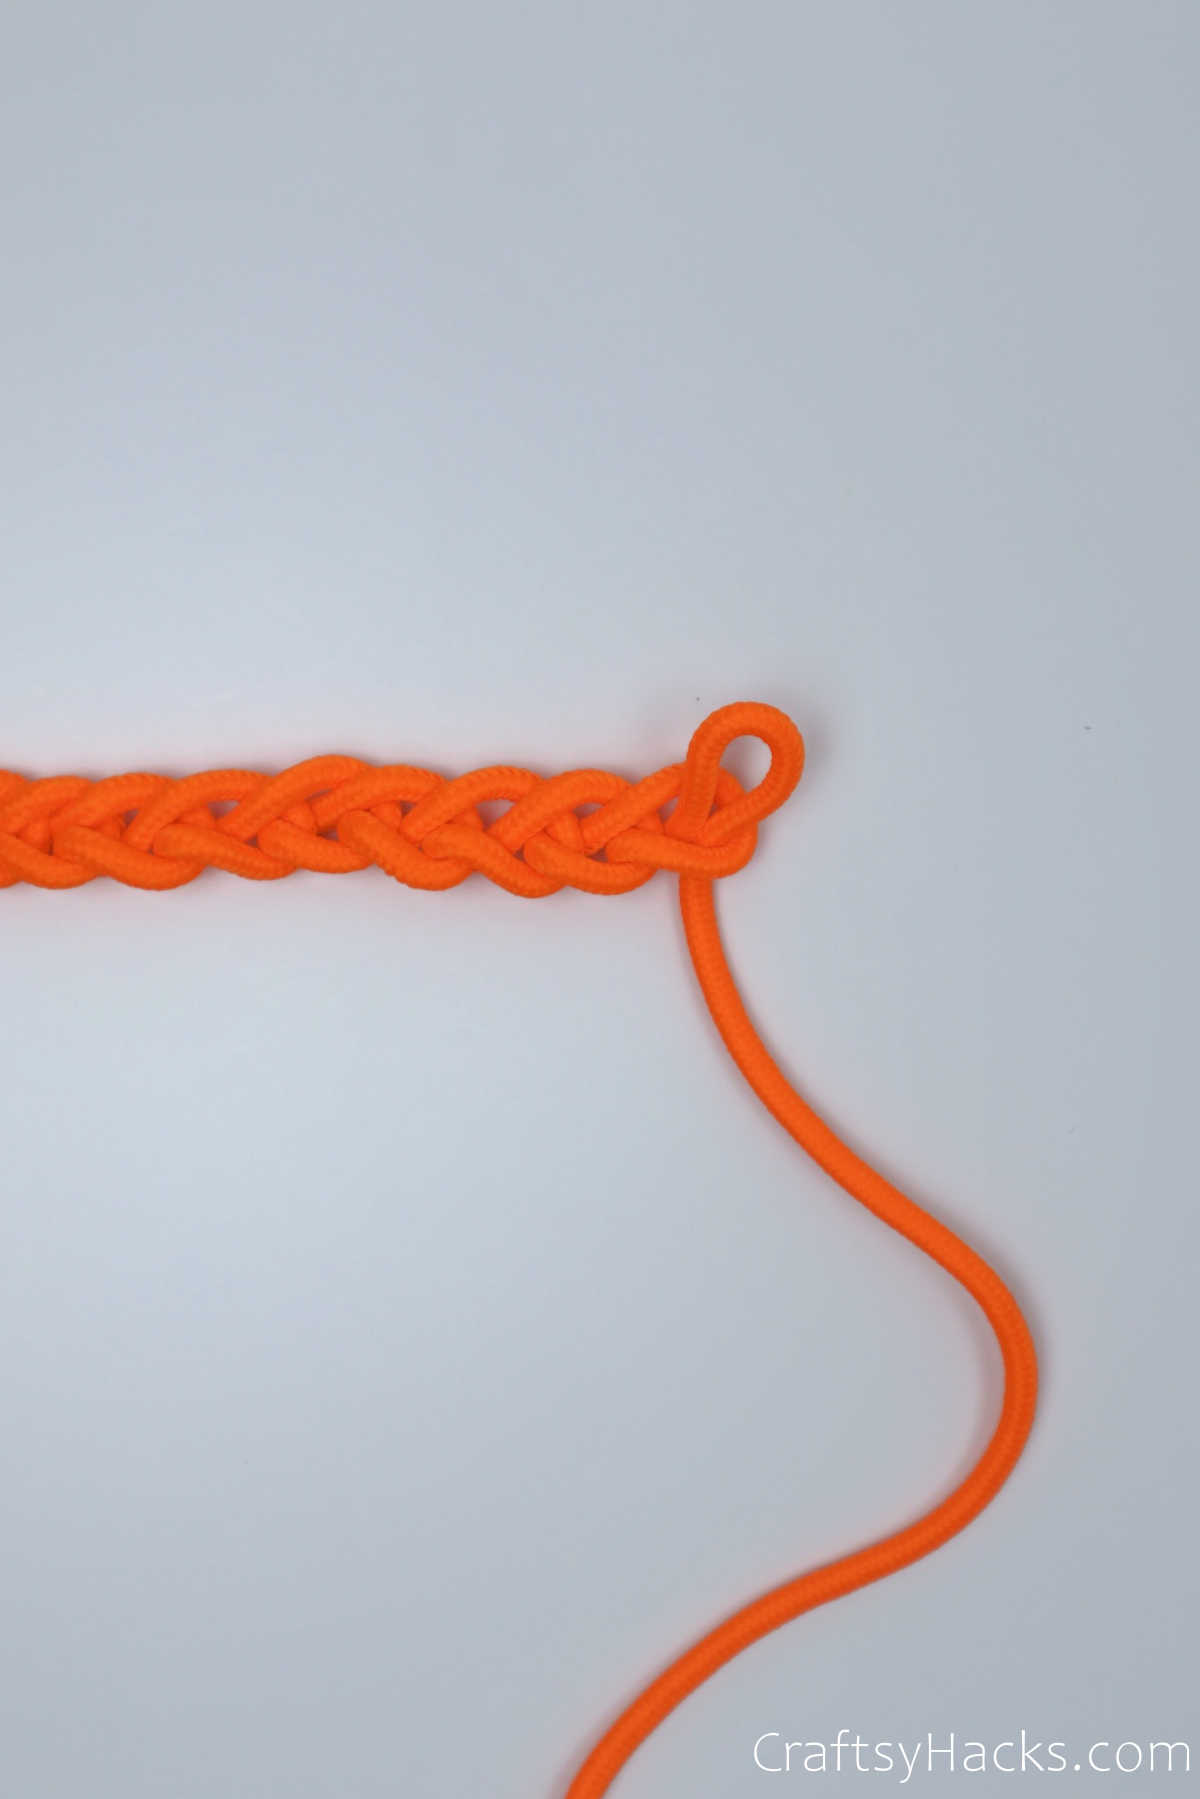 shoelace tied into bracelet knots